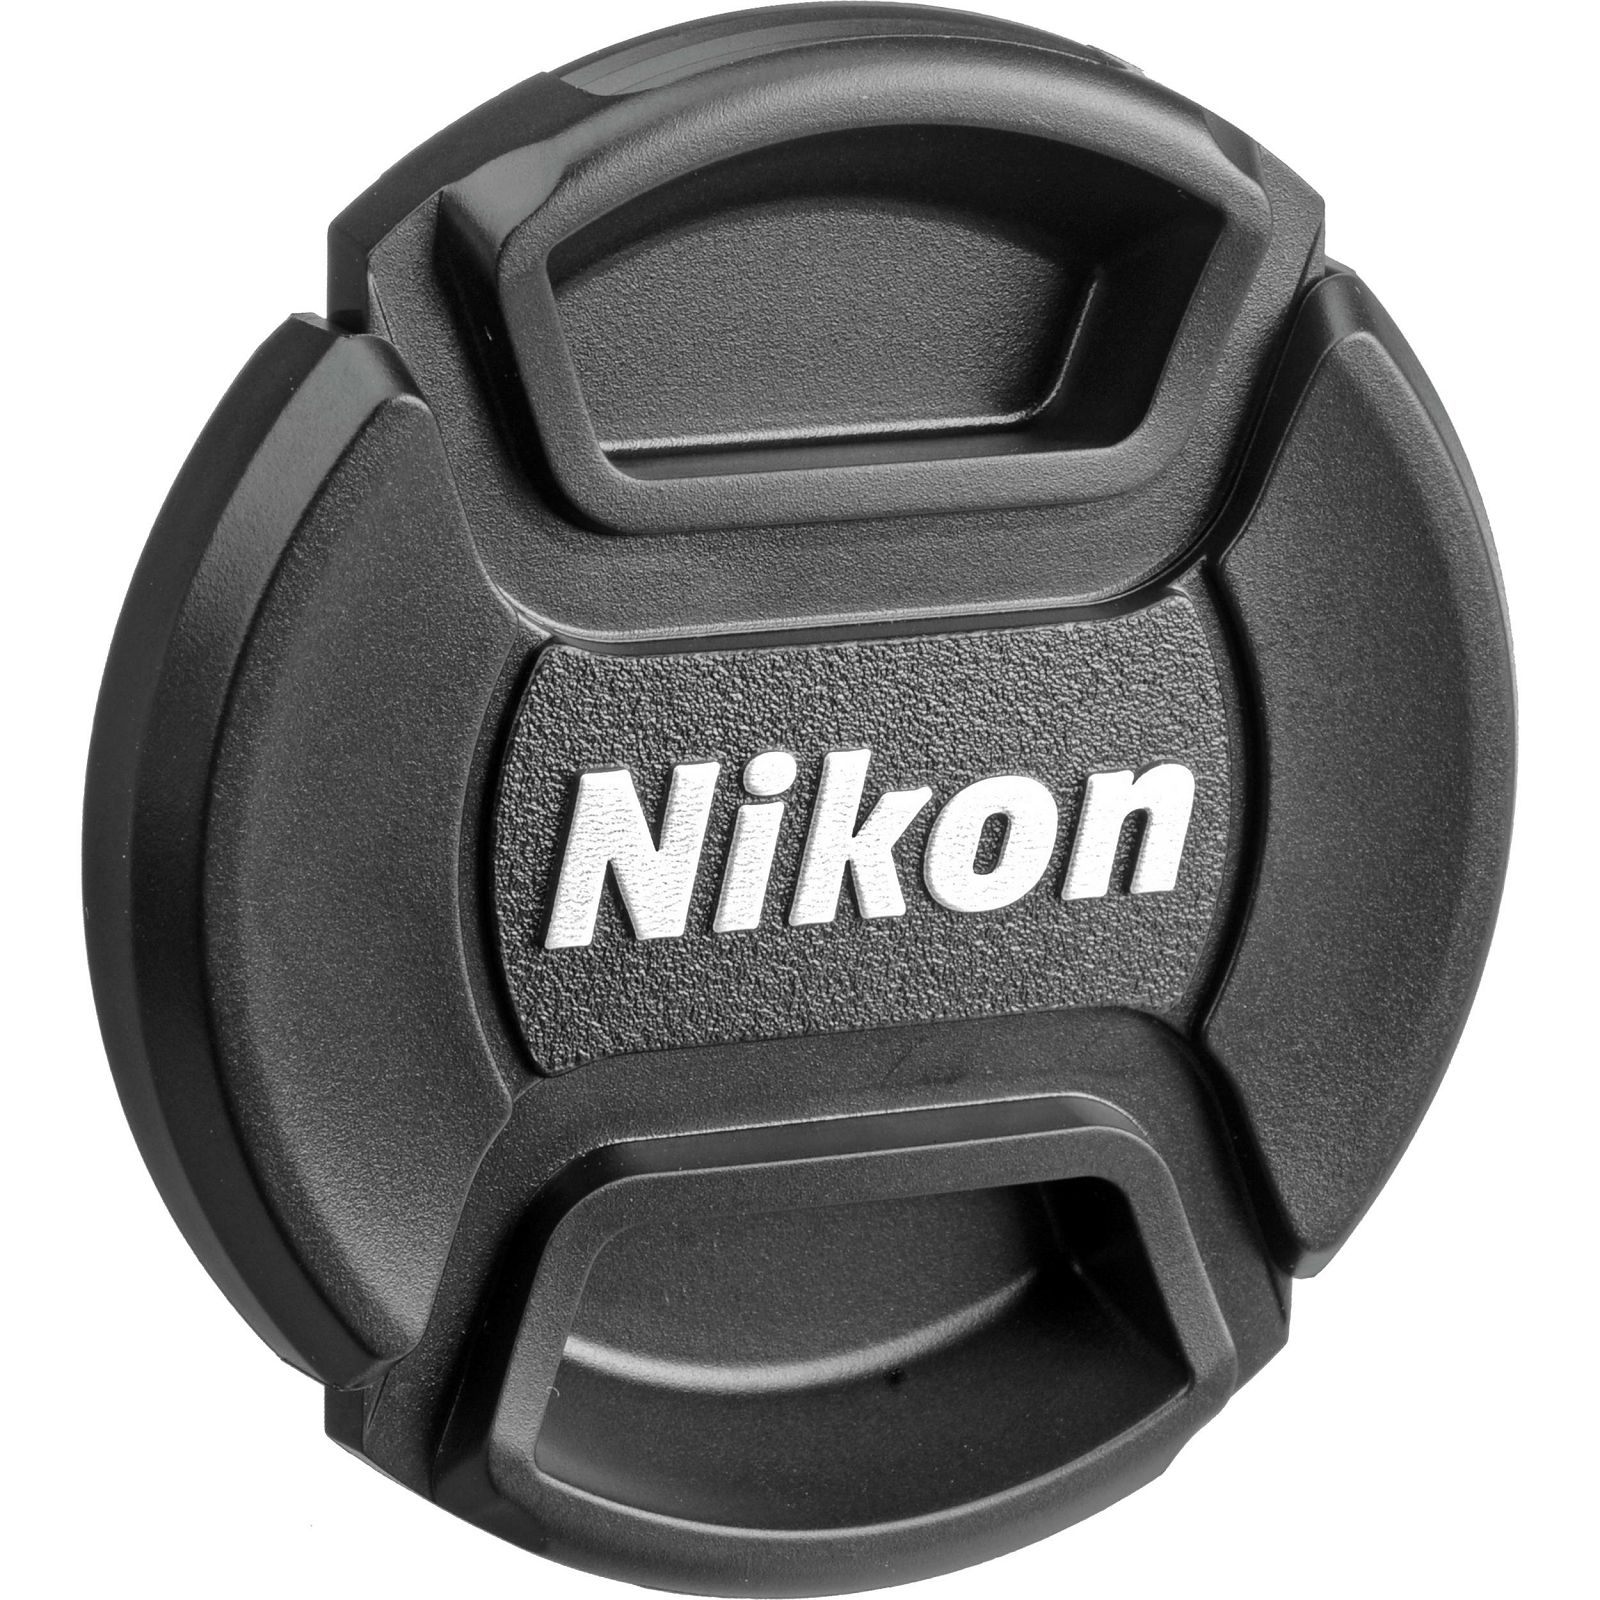 Nikon AF-S 70-300mm f/4.5-5.6G IF-ED VR FX telefoto objektiv Nikkor 70-300 4.5-5.6 G auto focus lens (JAA795DA)